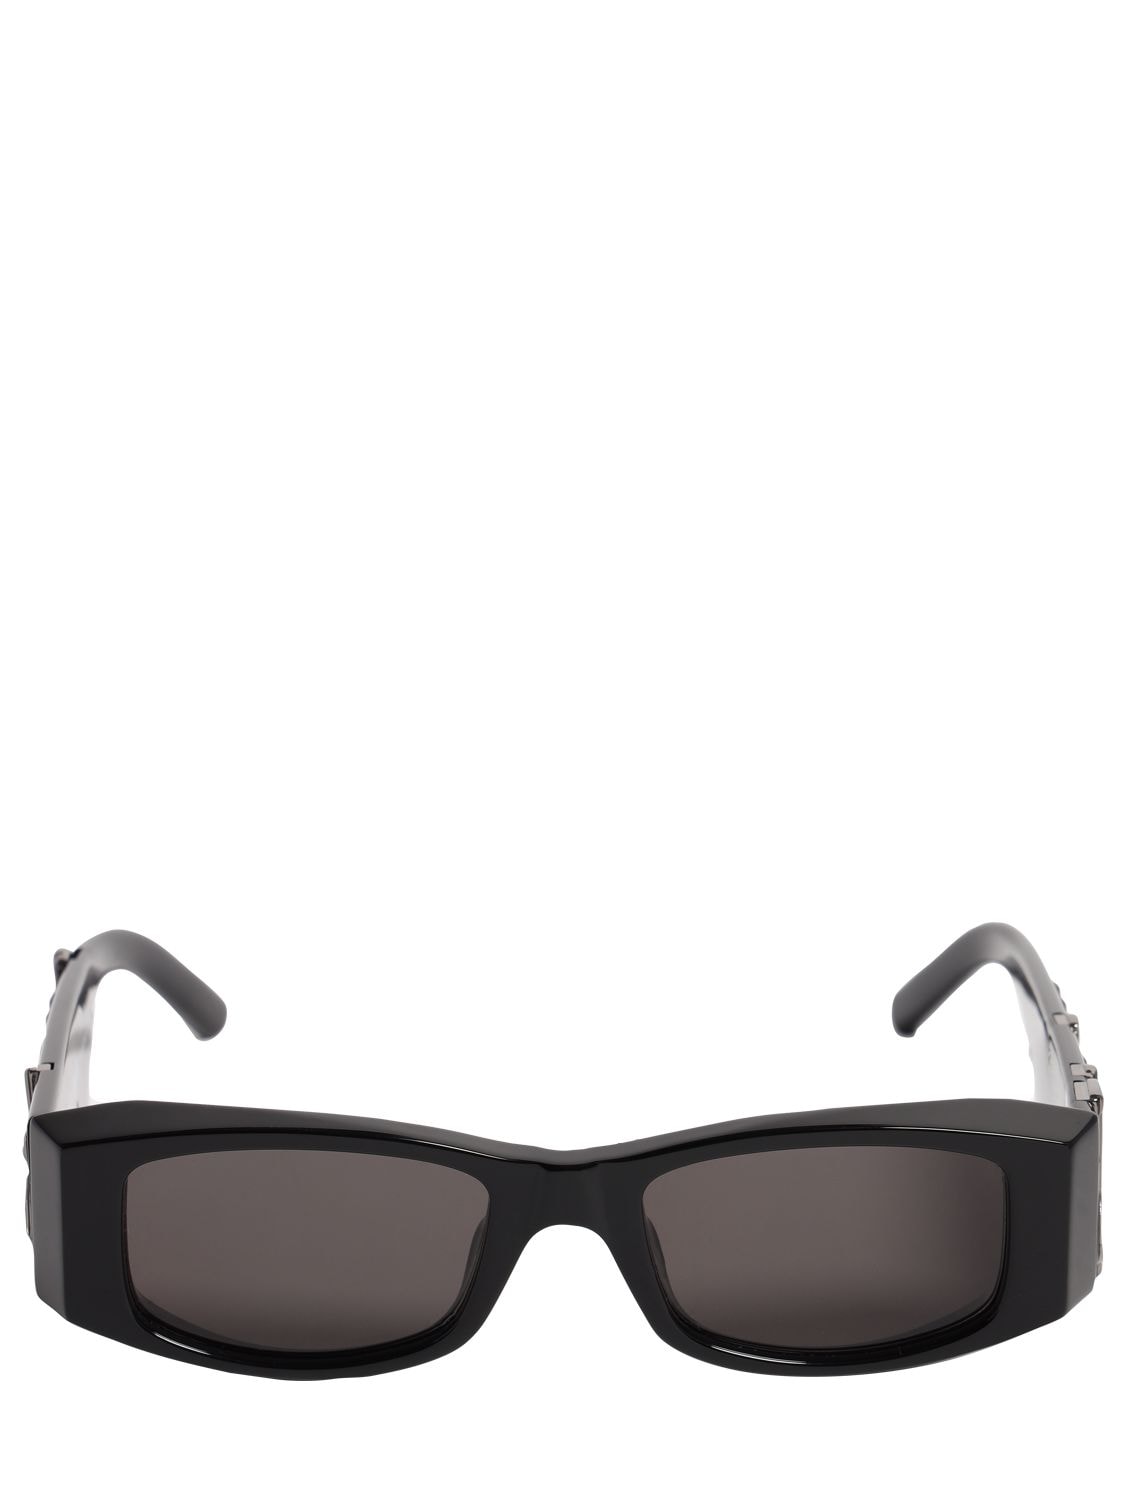 Image of Angel Squared Acetate Sunglasses